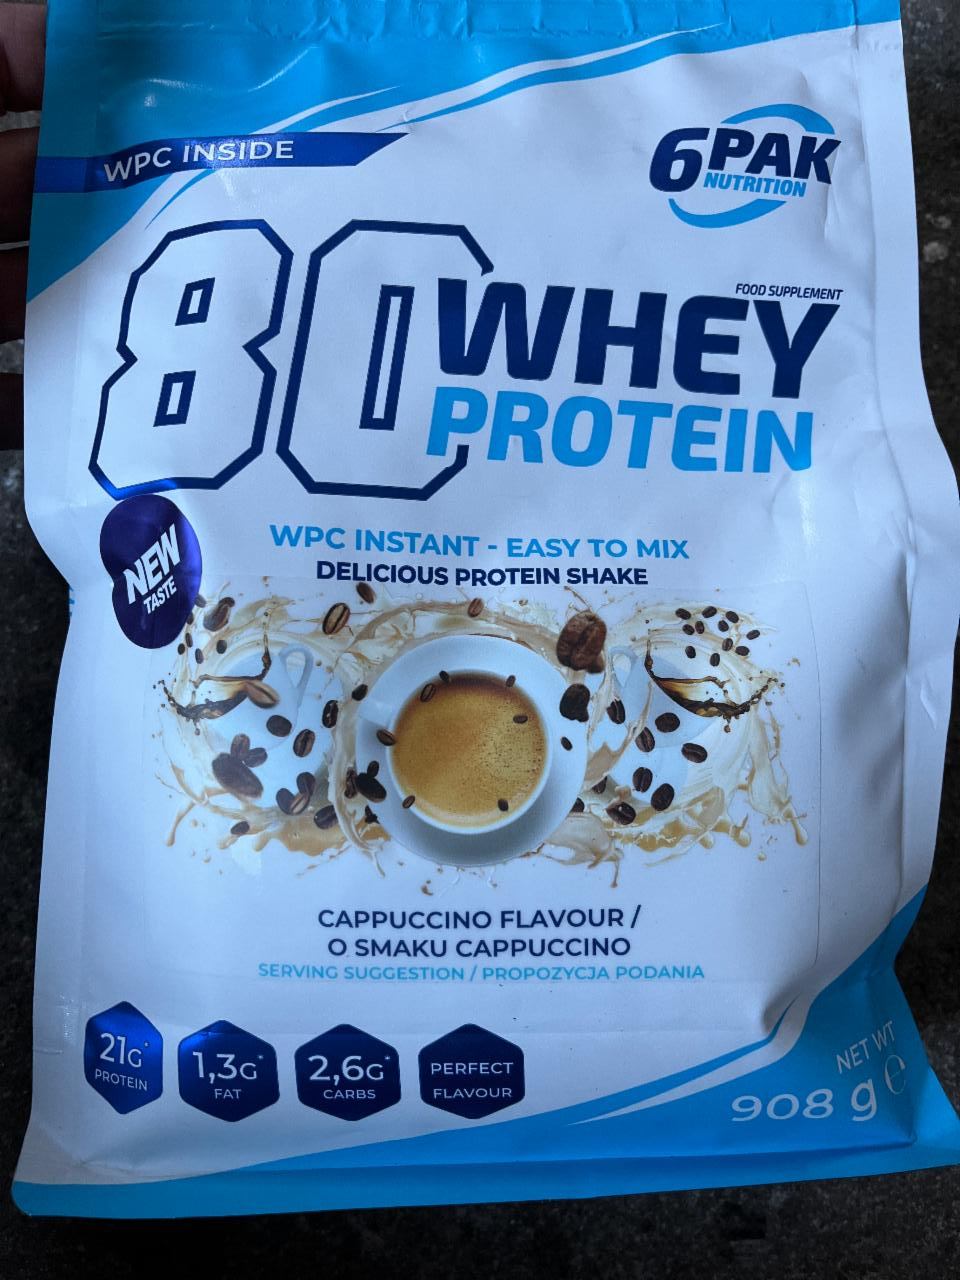 Fotografie - 80 Whey Protein Cappuccino 6PAK Nutrition